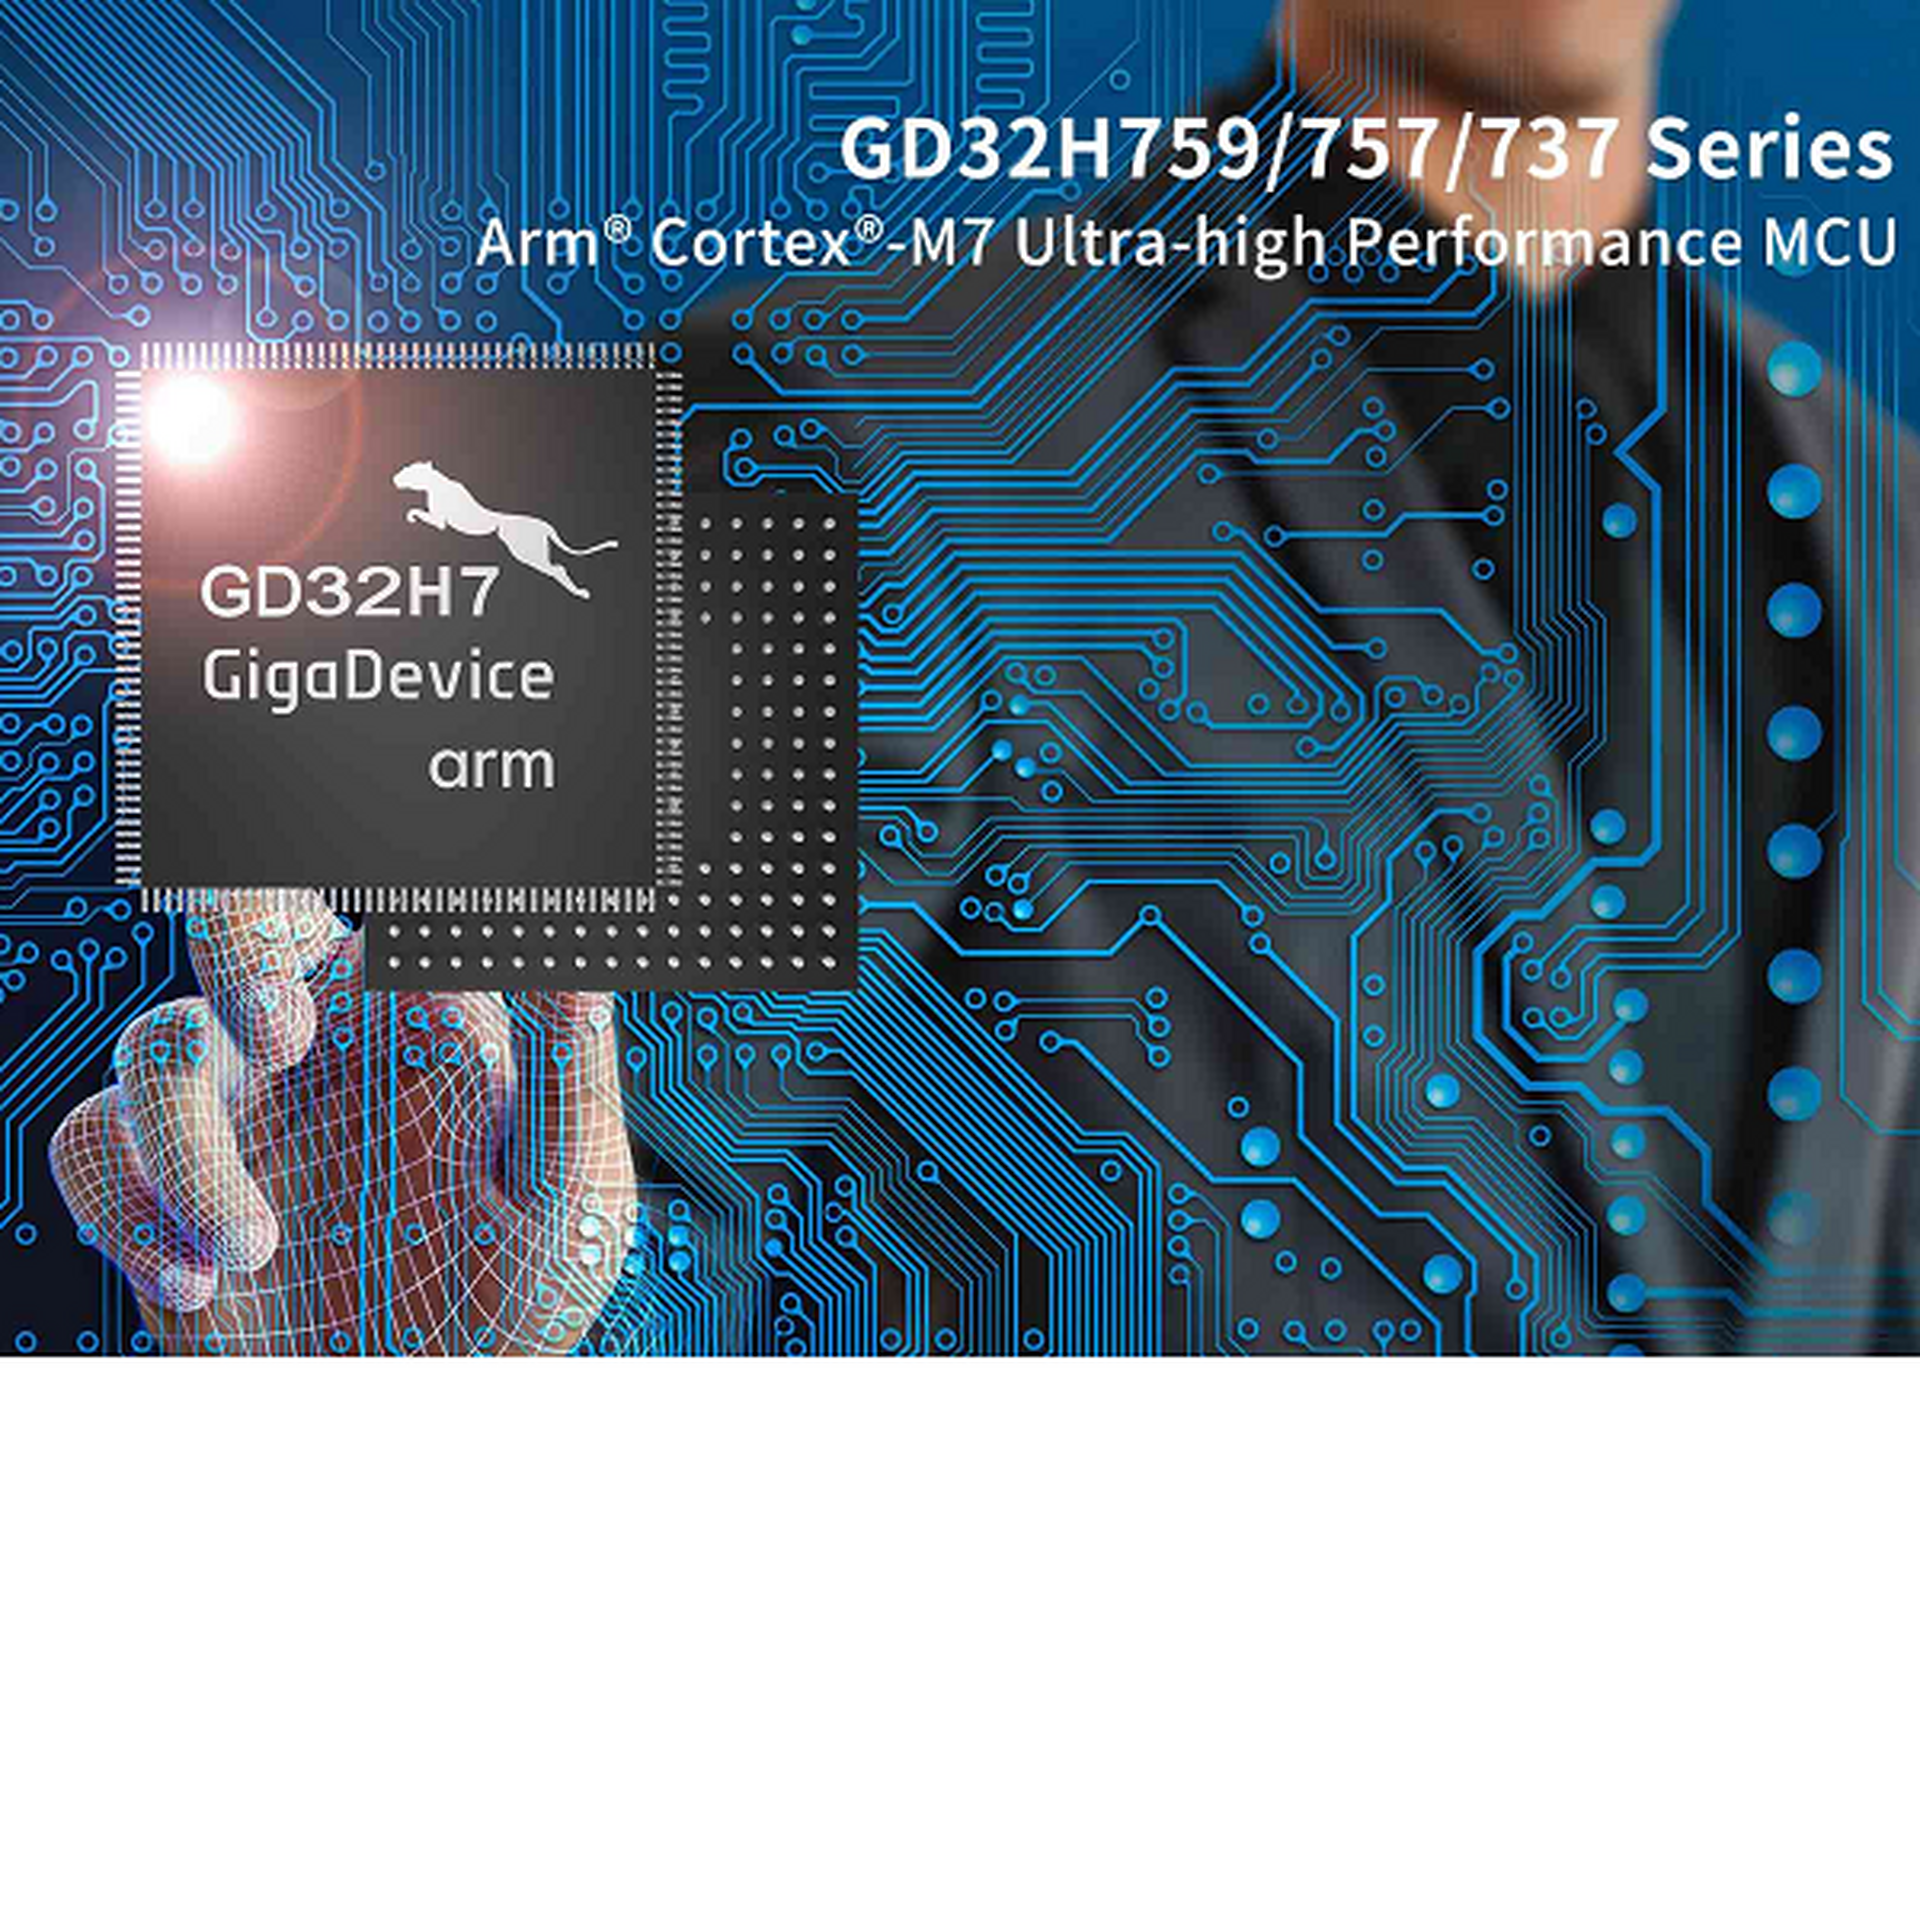 Giga Device GD32 H759 757 737